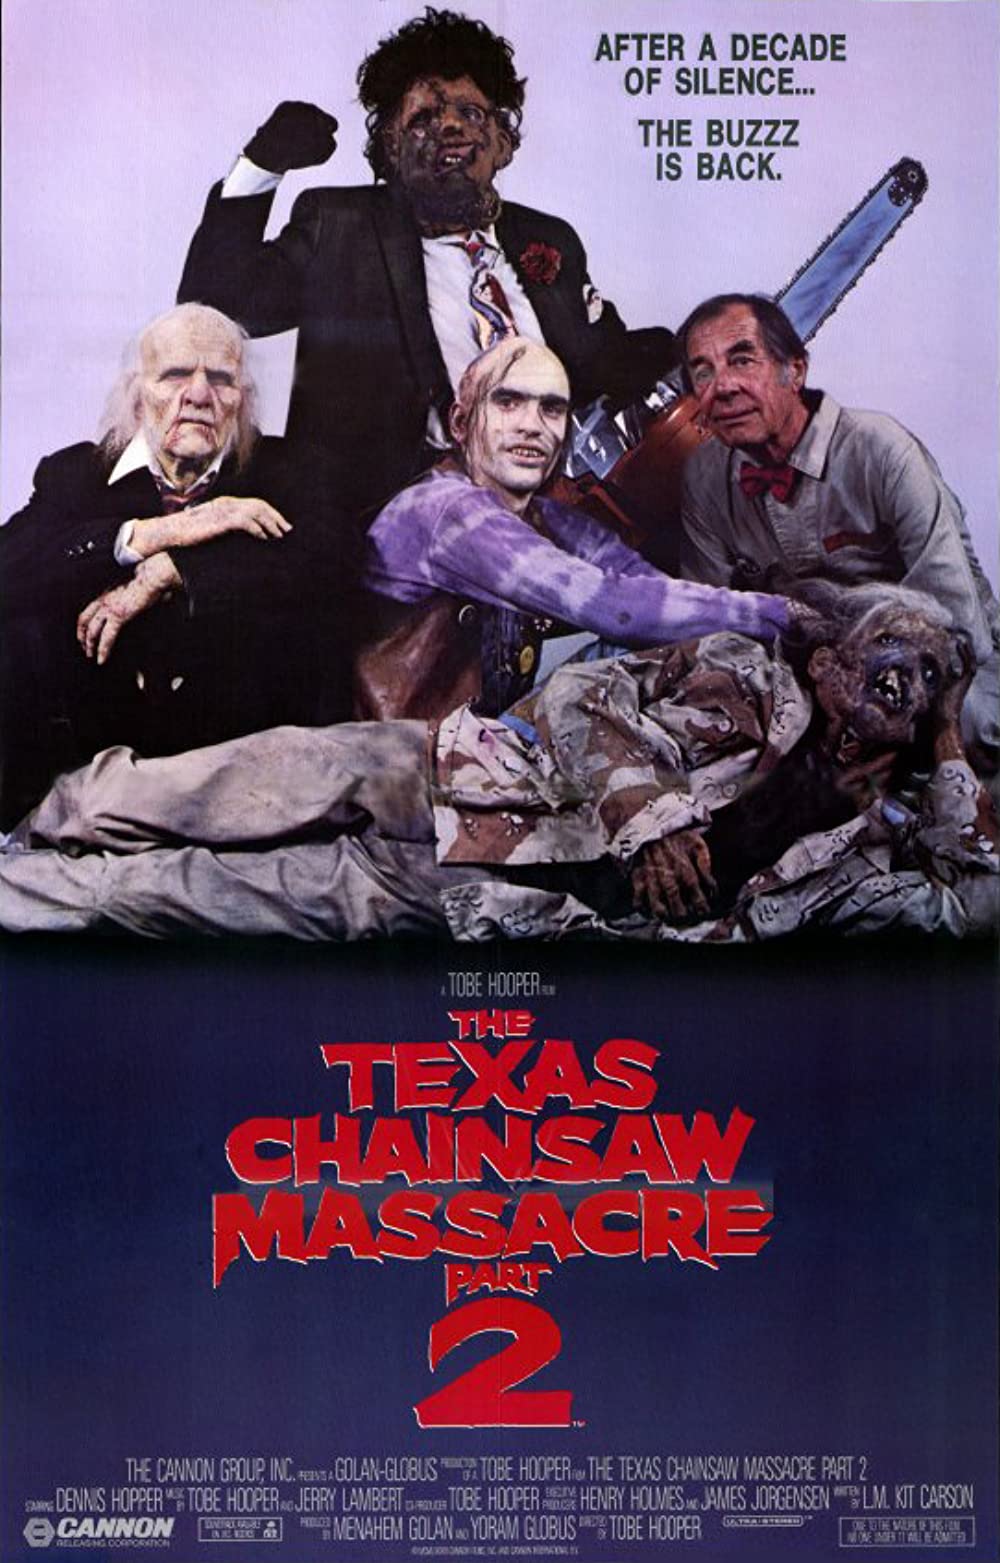 Filmbeschreibung zu The Texas Chainsaw Massacre 2